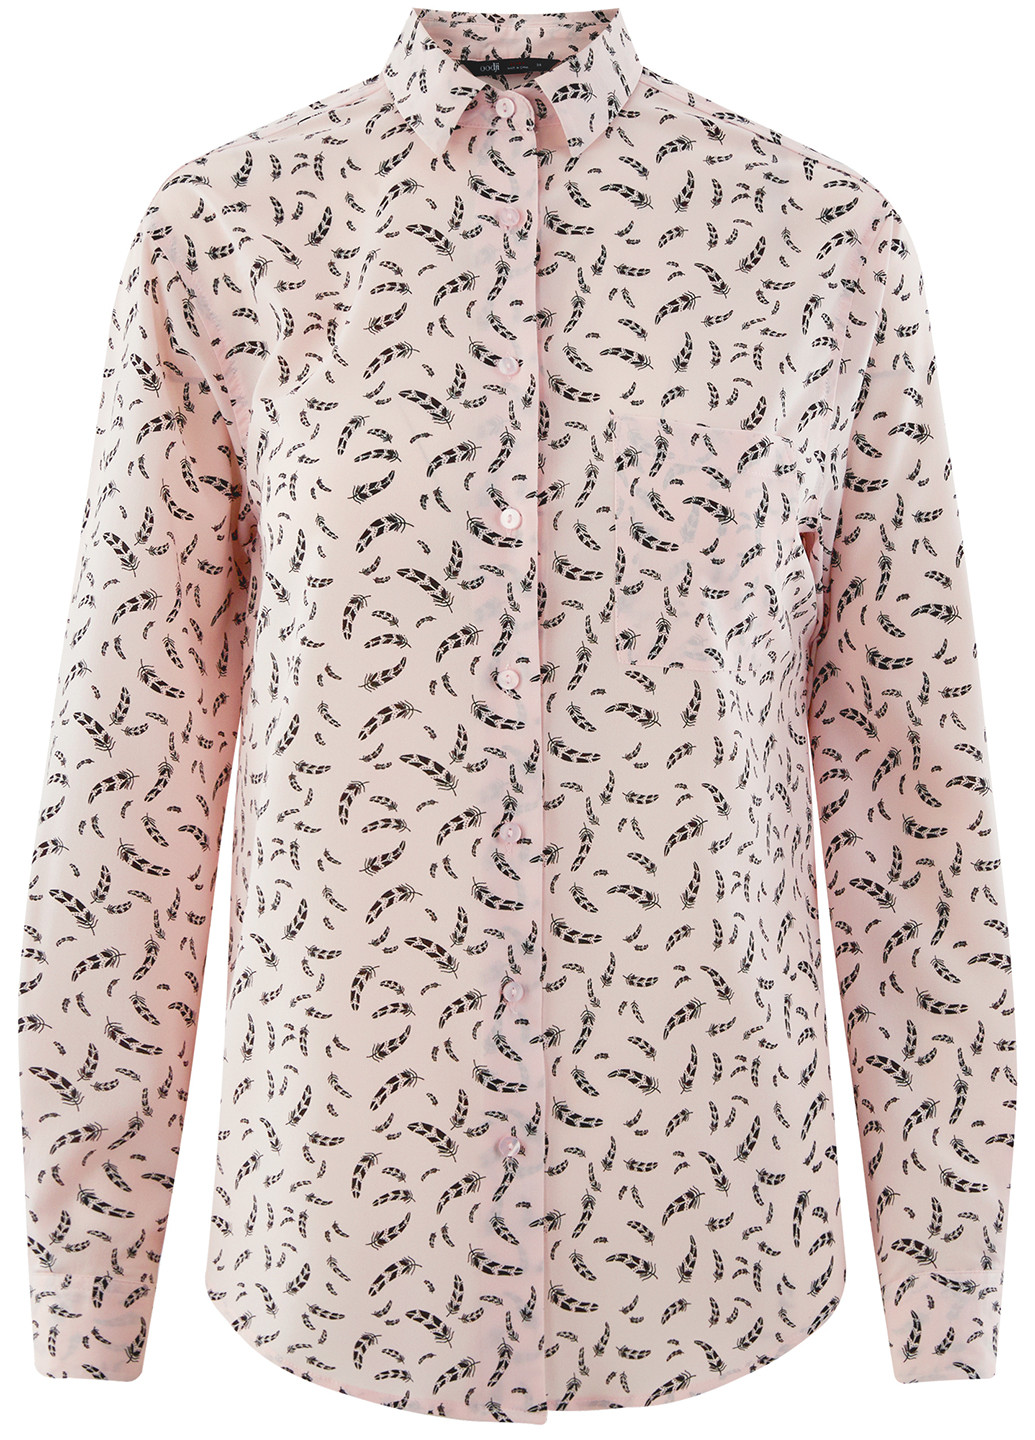 Светло-розовая демисезонная блуза Oodji